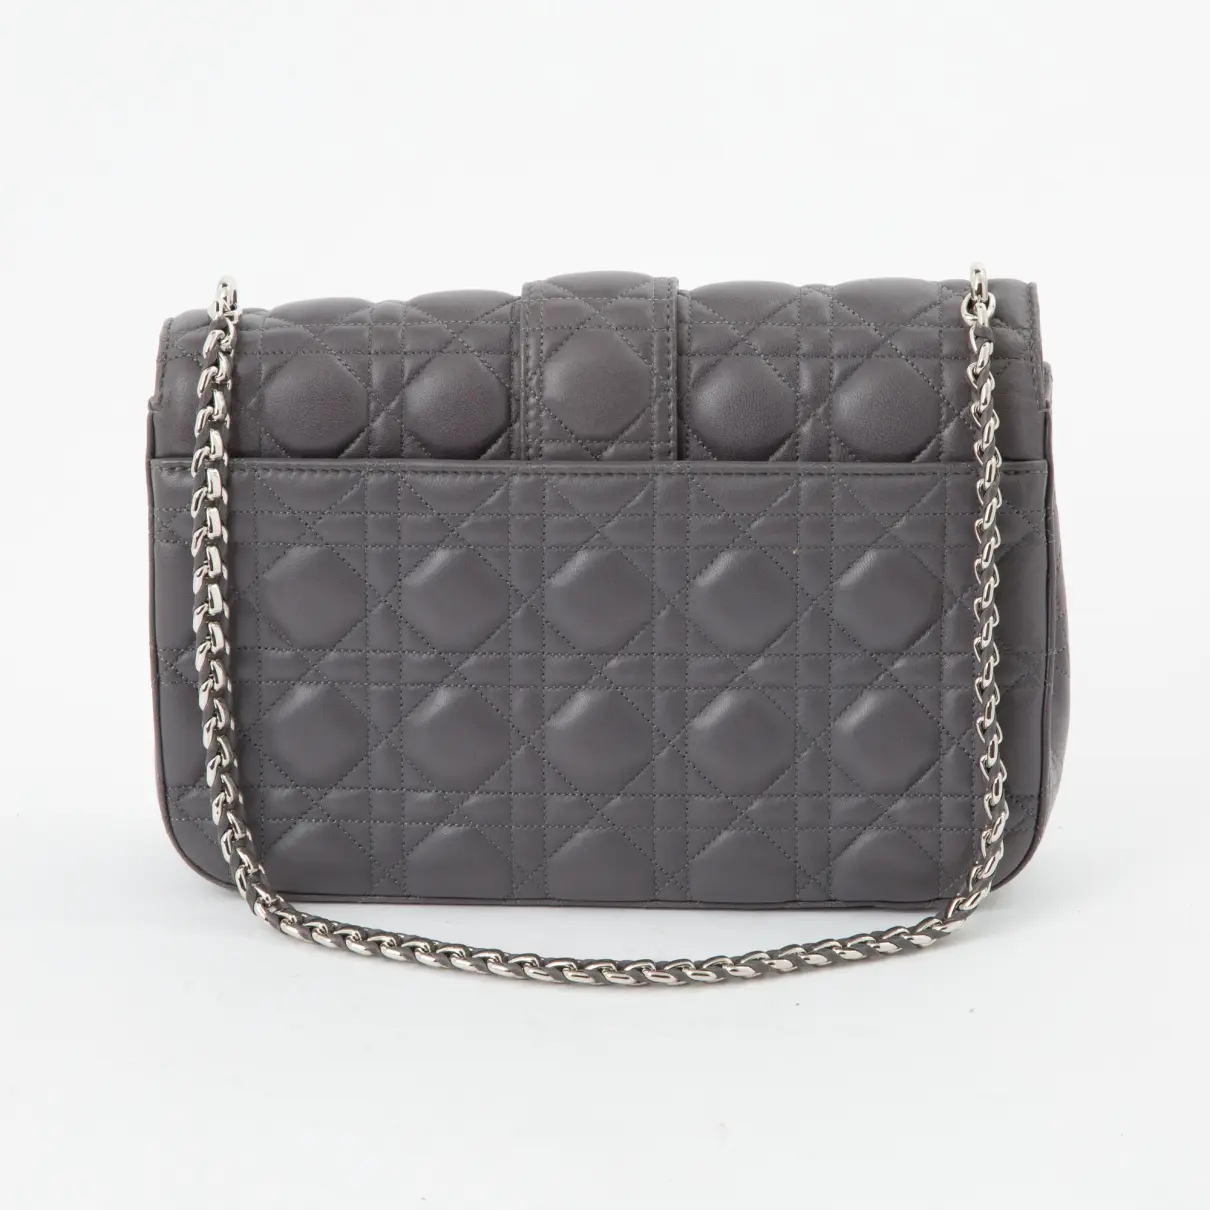 Buy Dior Miss Dior leather mini bag online